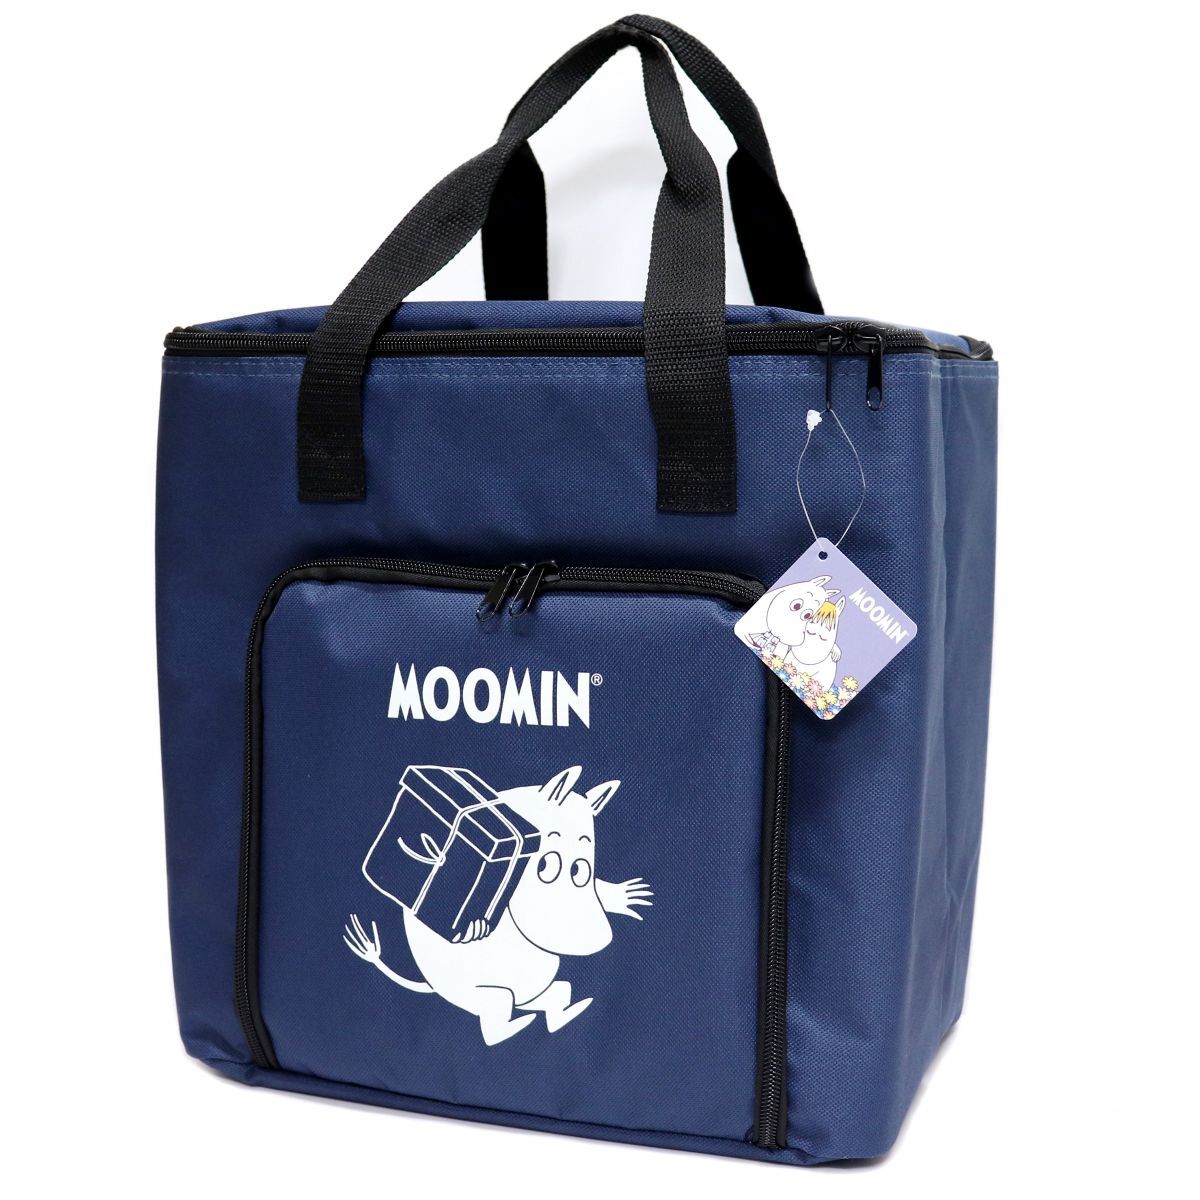 * Moomin MOOMIN new goods convenience high capacity keep cool multi bag cooler bag BAG bag bag navy blue [MOOMINB-NVY1N] one six *QWER*